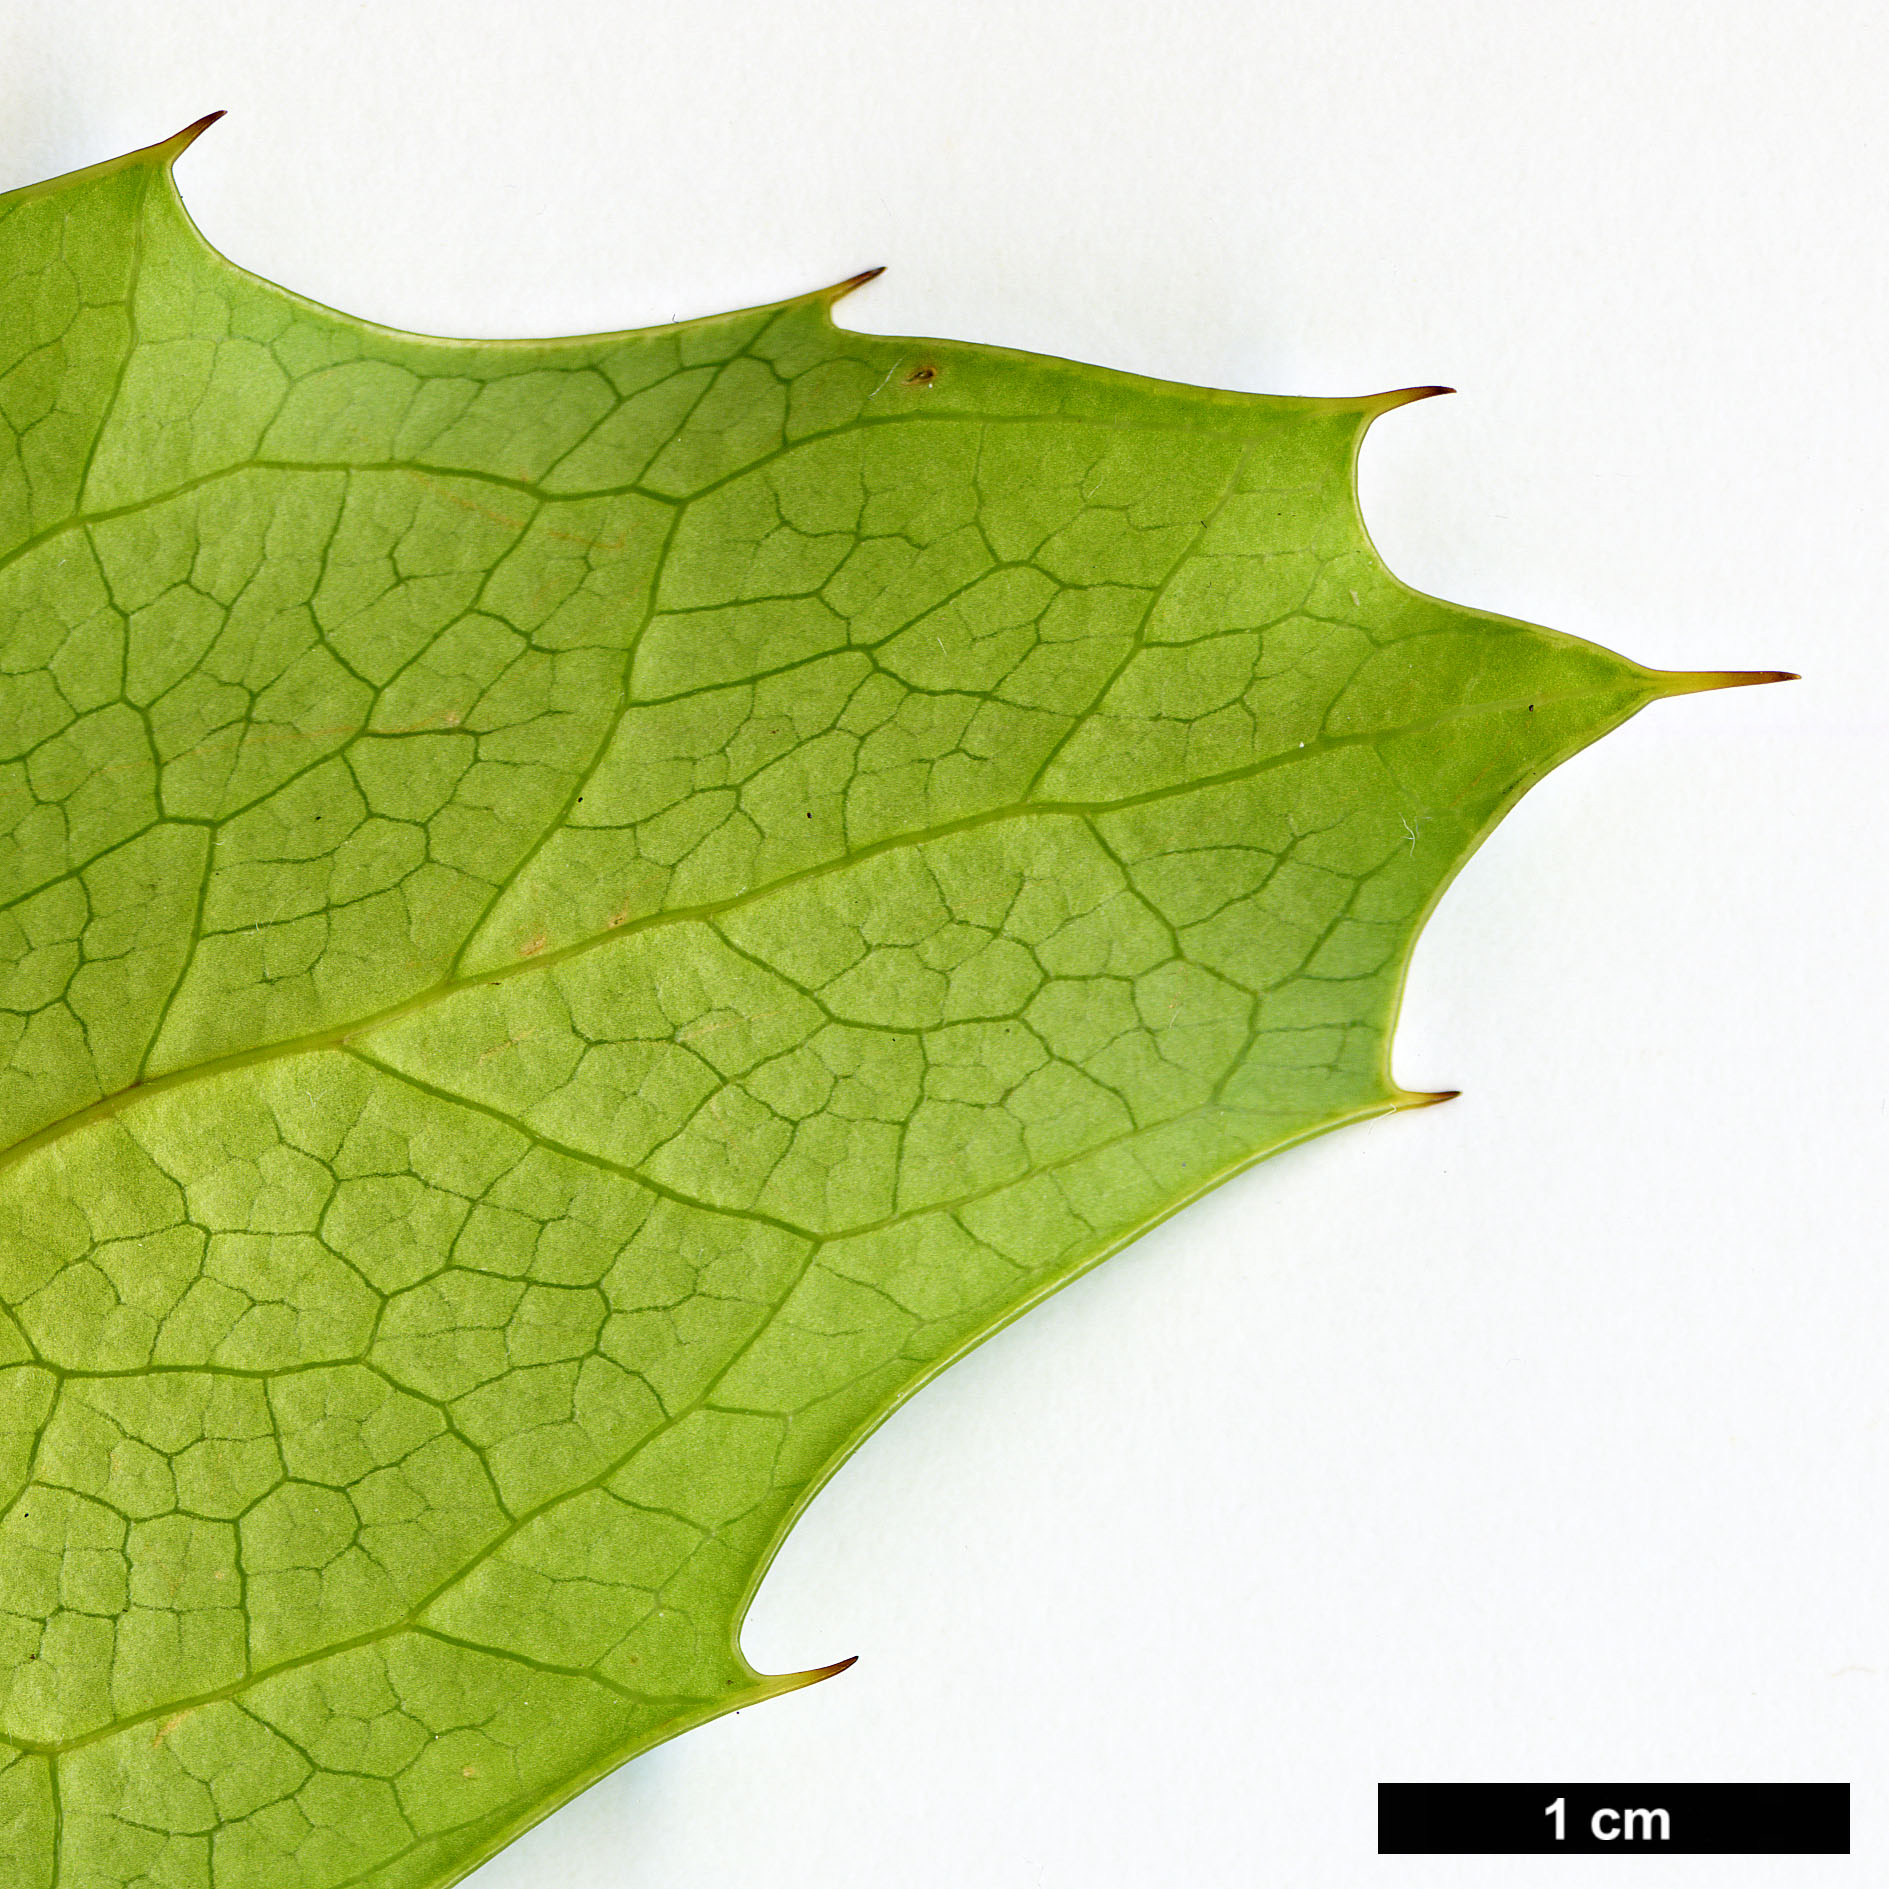 High resolution image: Family: Berberidaceae - Genus: Mahonia - Taxon: duclouxiana